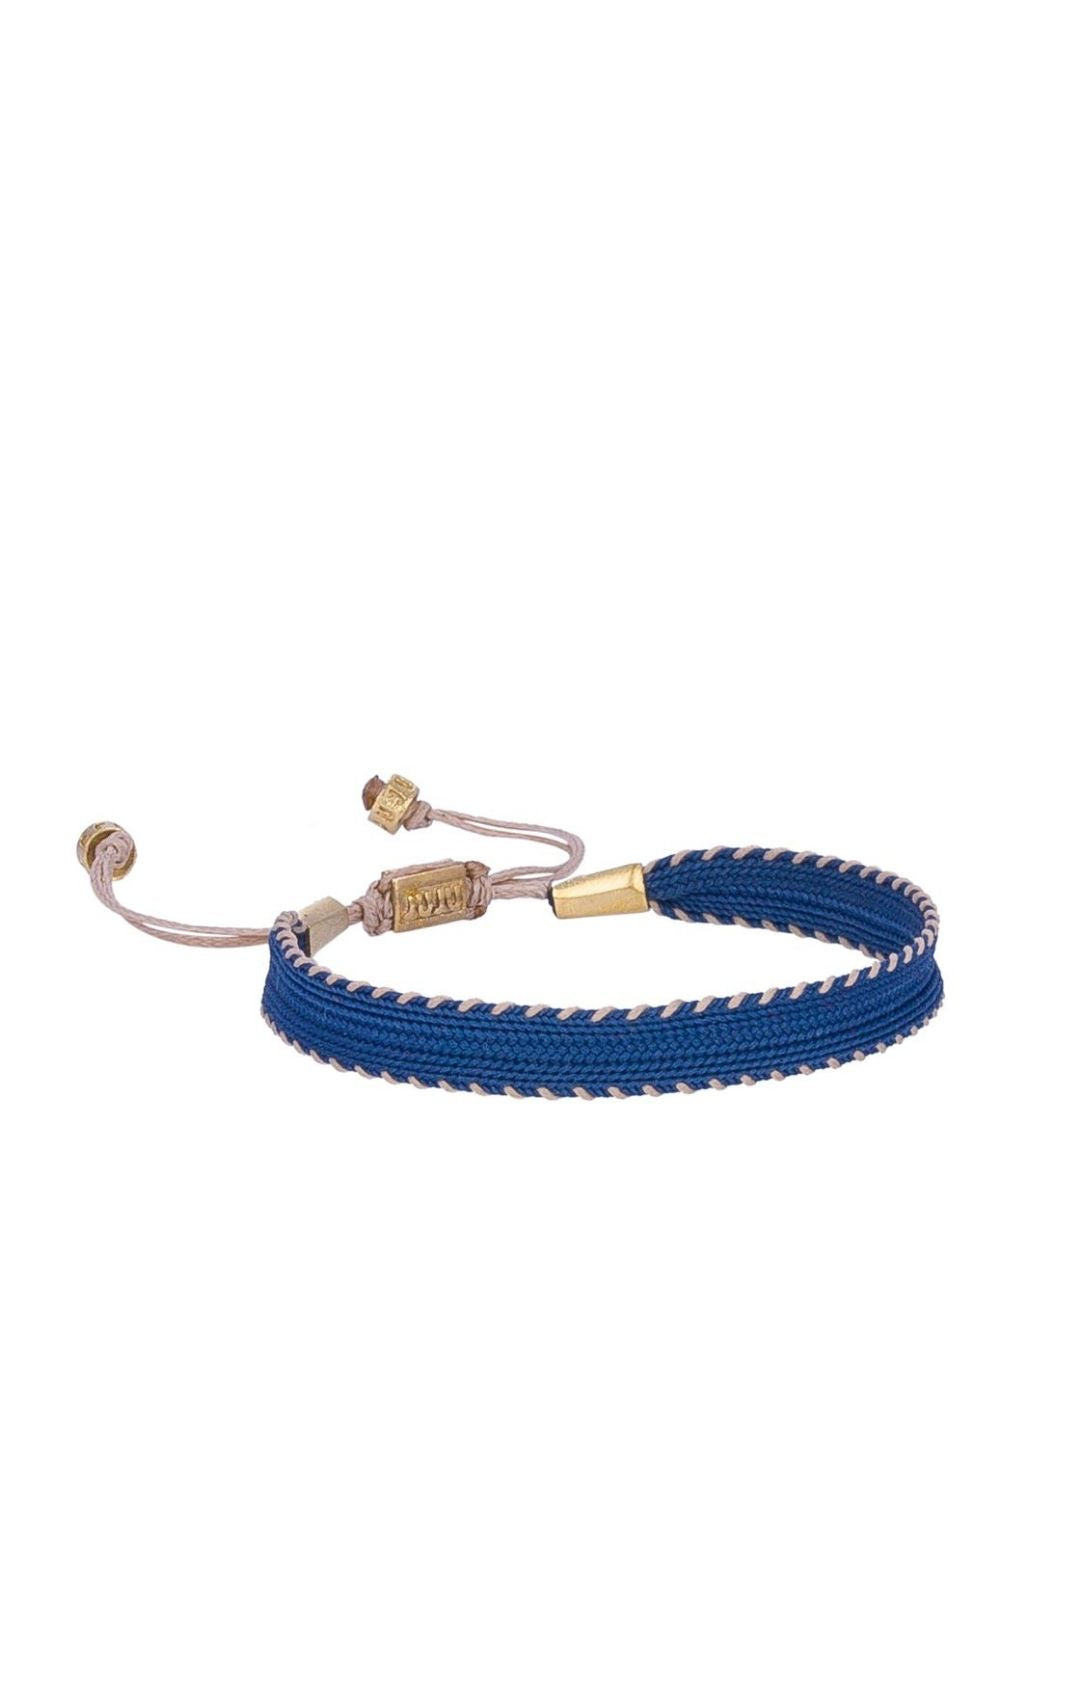 Coloured rope Bracelet